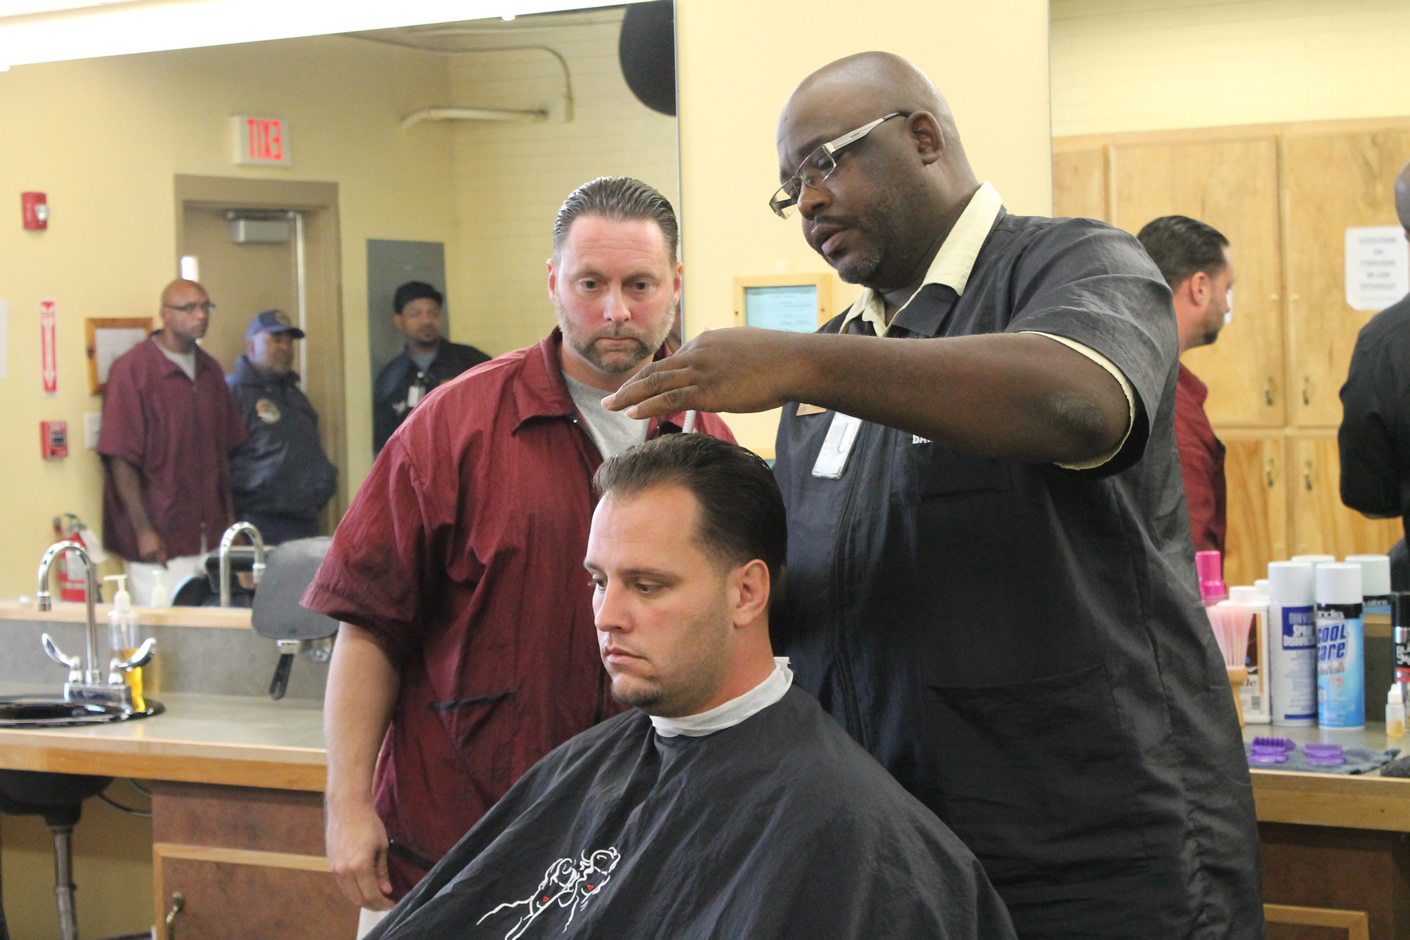 Read the full story, CCCC Barber Program Offers Inmates Fresh Start